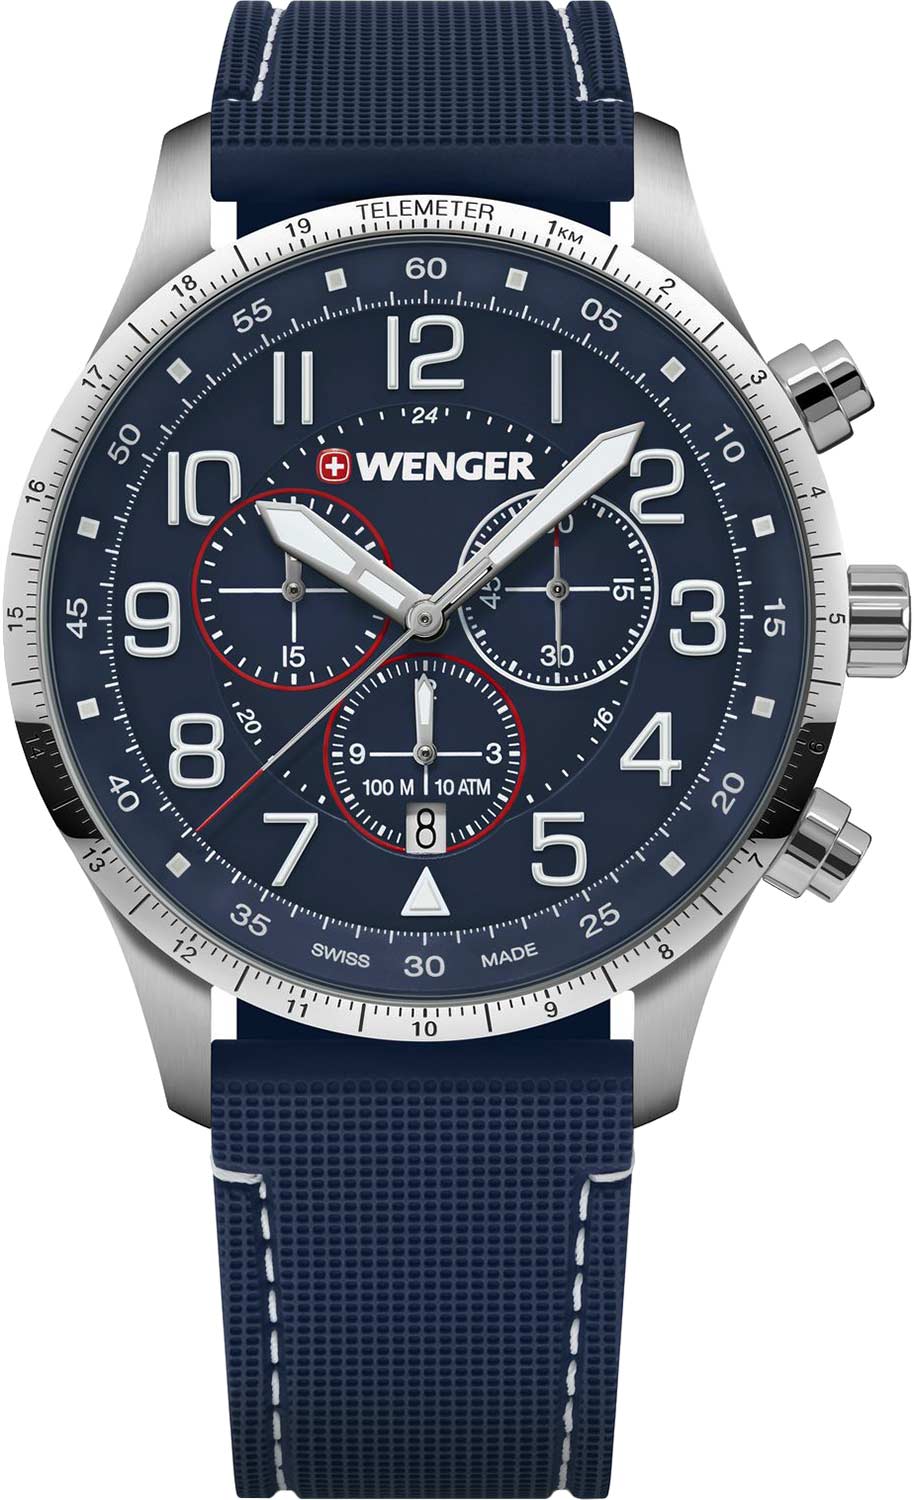 Швейцарские наручные часы Wenger 01.1543.117 с хронографом